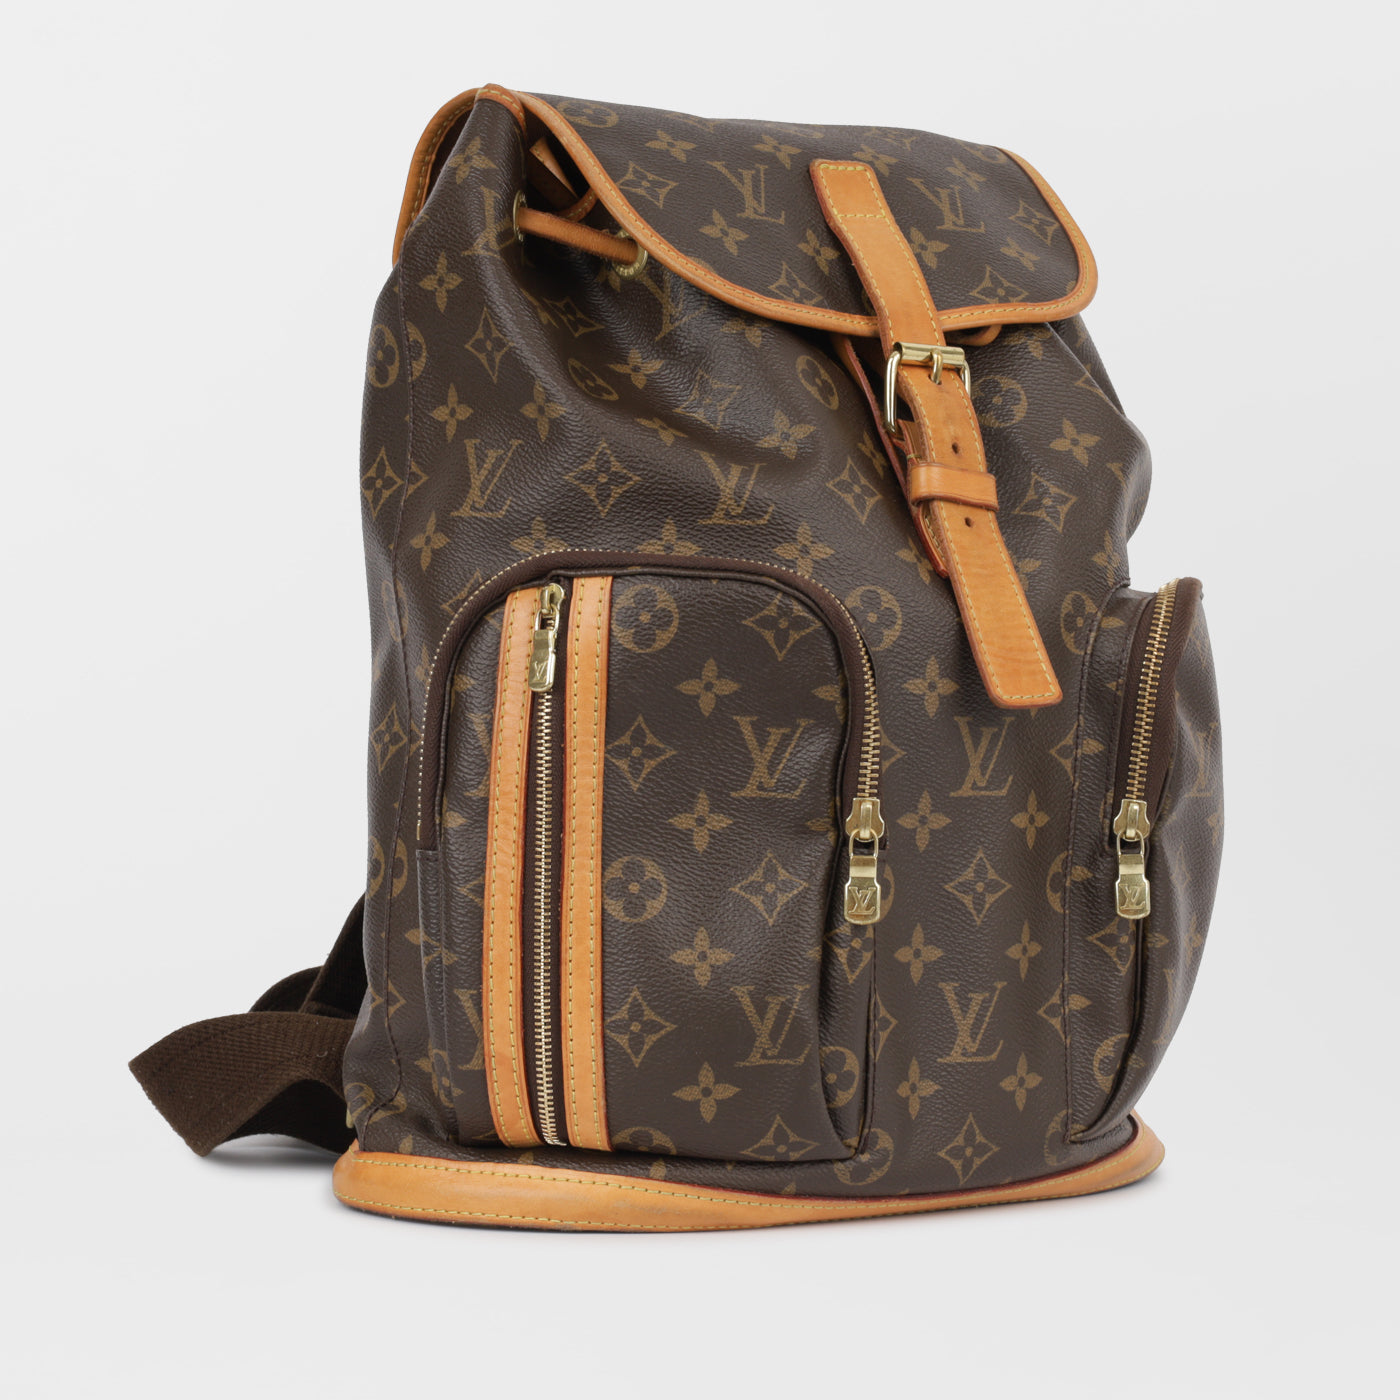 Louis Vuitton Backpack -  UK